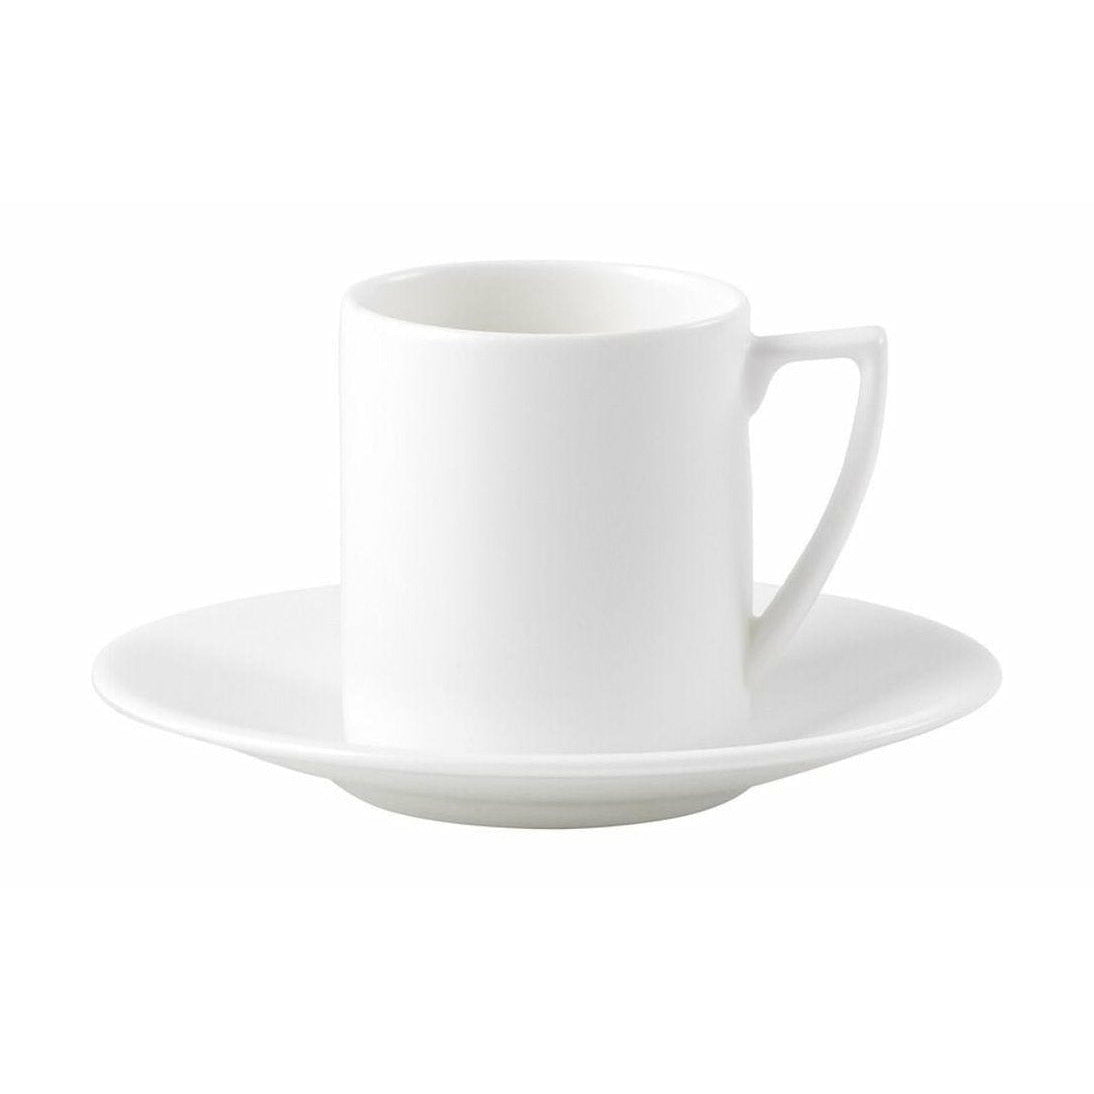 Wedgwood Jasper Conran White Espresso Cup And Saucer, 0,8 L